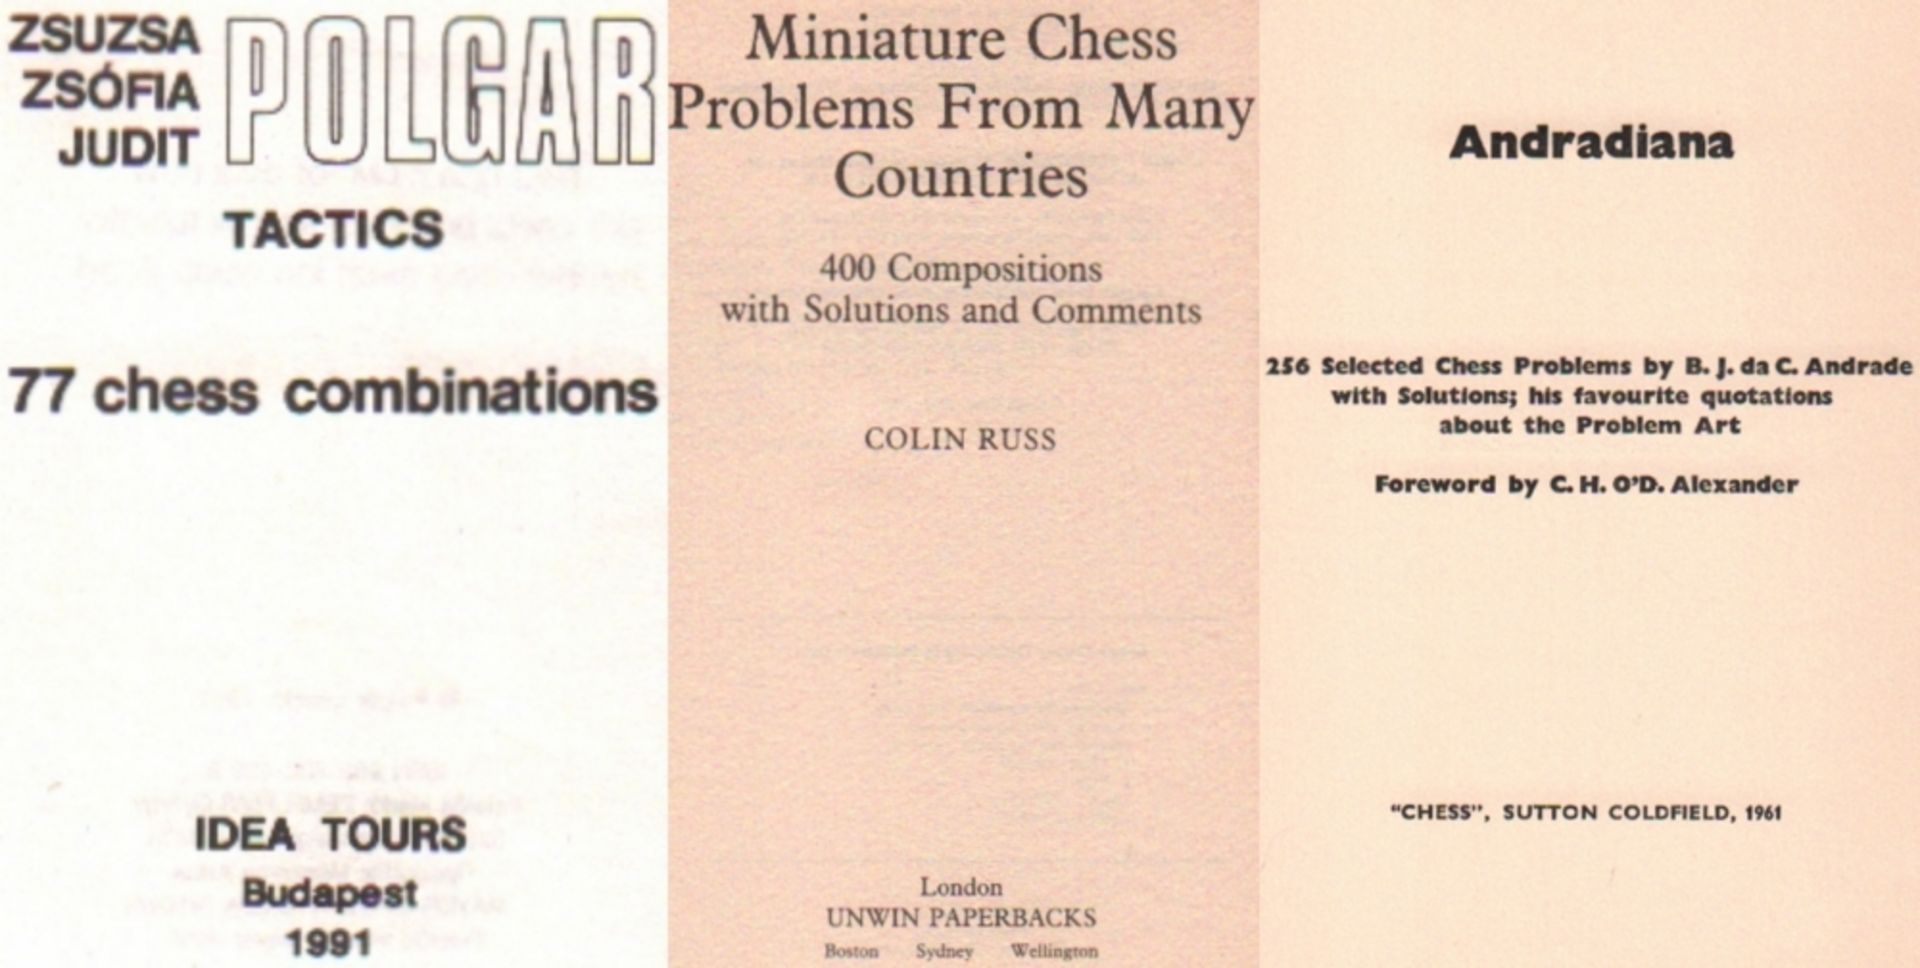 Polgár, Zsuzsa, Zsófia und Judit. Tactics. 77 chess combinations. Budapest, Idea Tours, 1991. 16°.